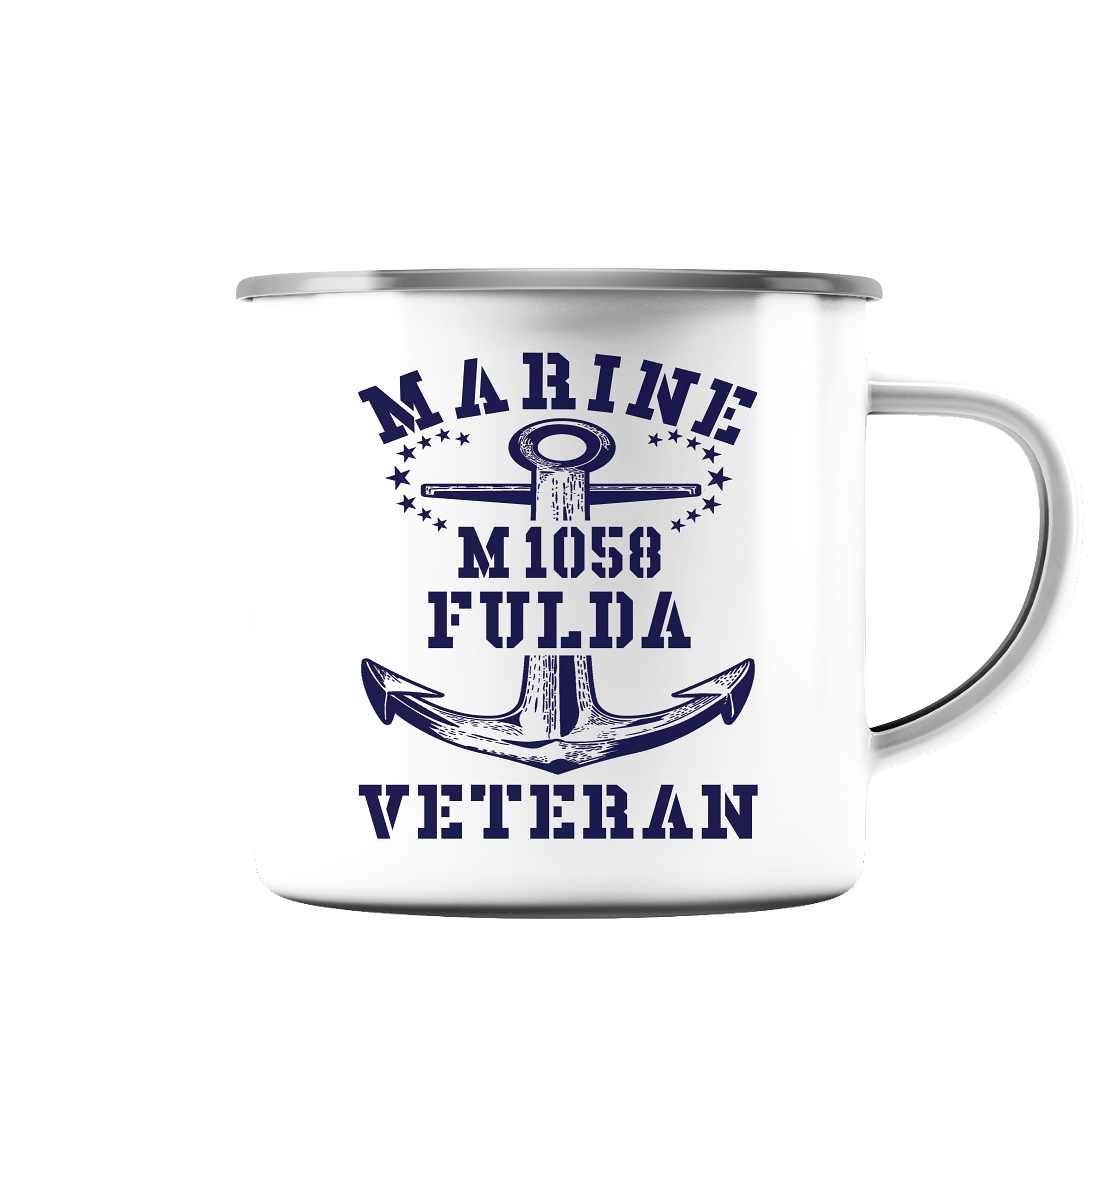 Mij.-Boot M1058 FULDA Marine Veteran - Emaille Tasse (Silber)